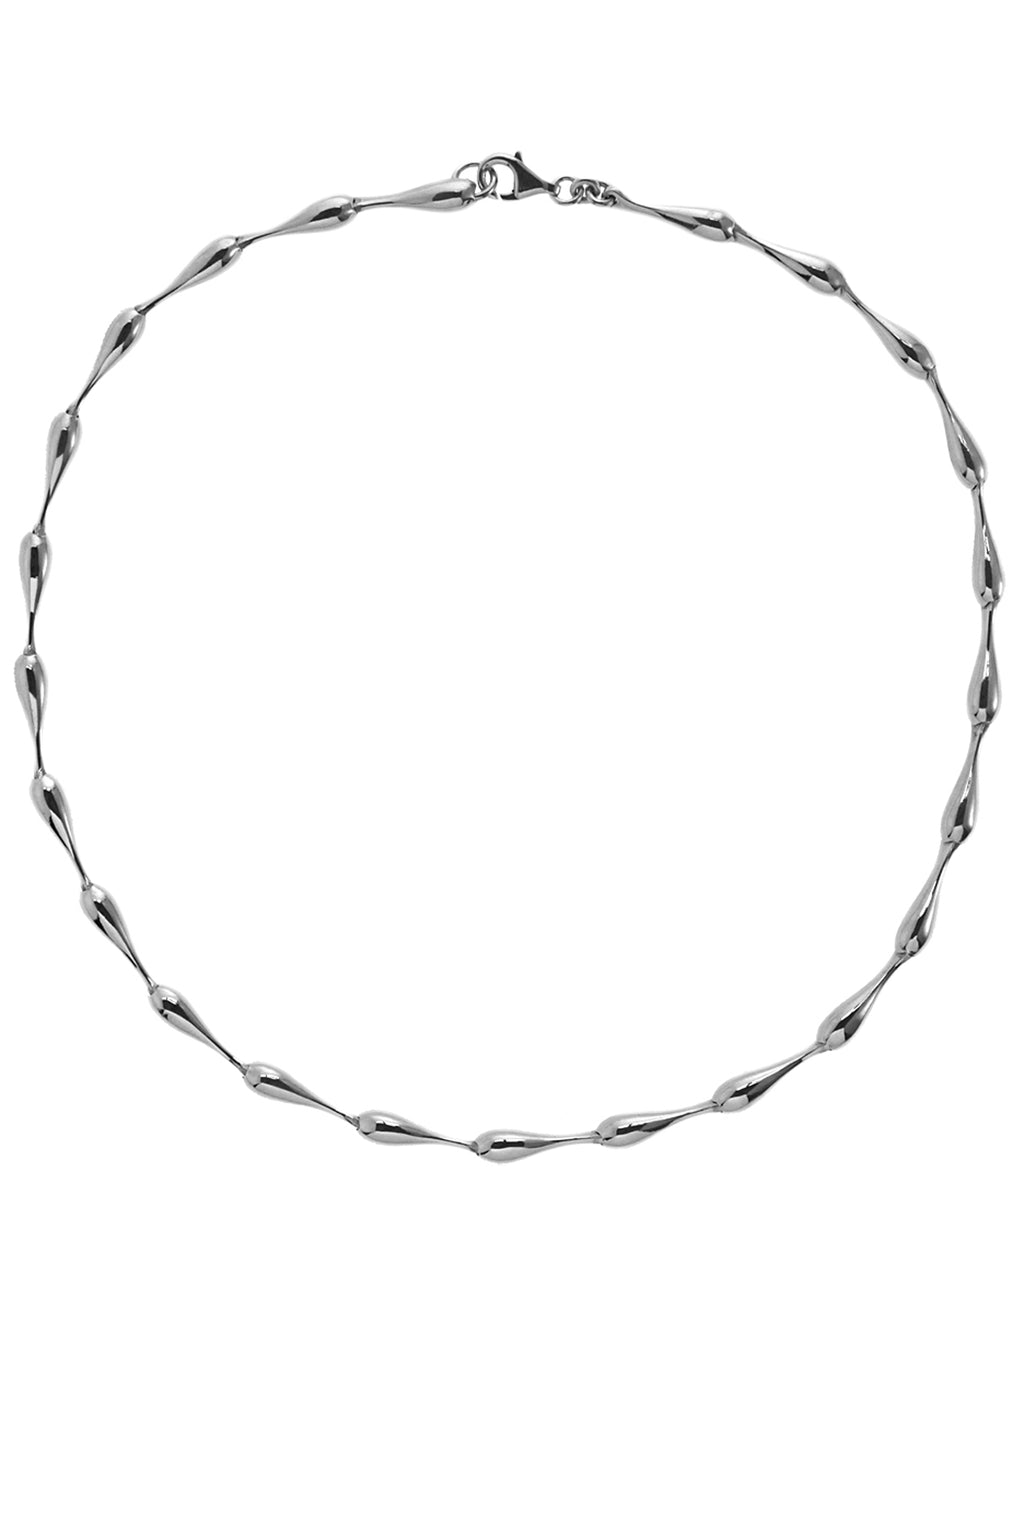 Silver Necklet or Necklace